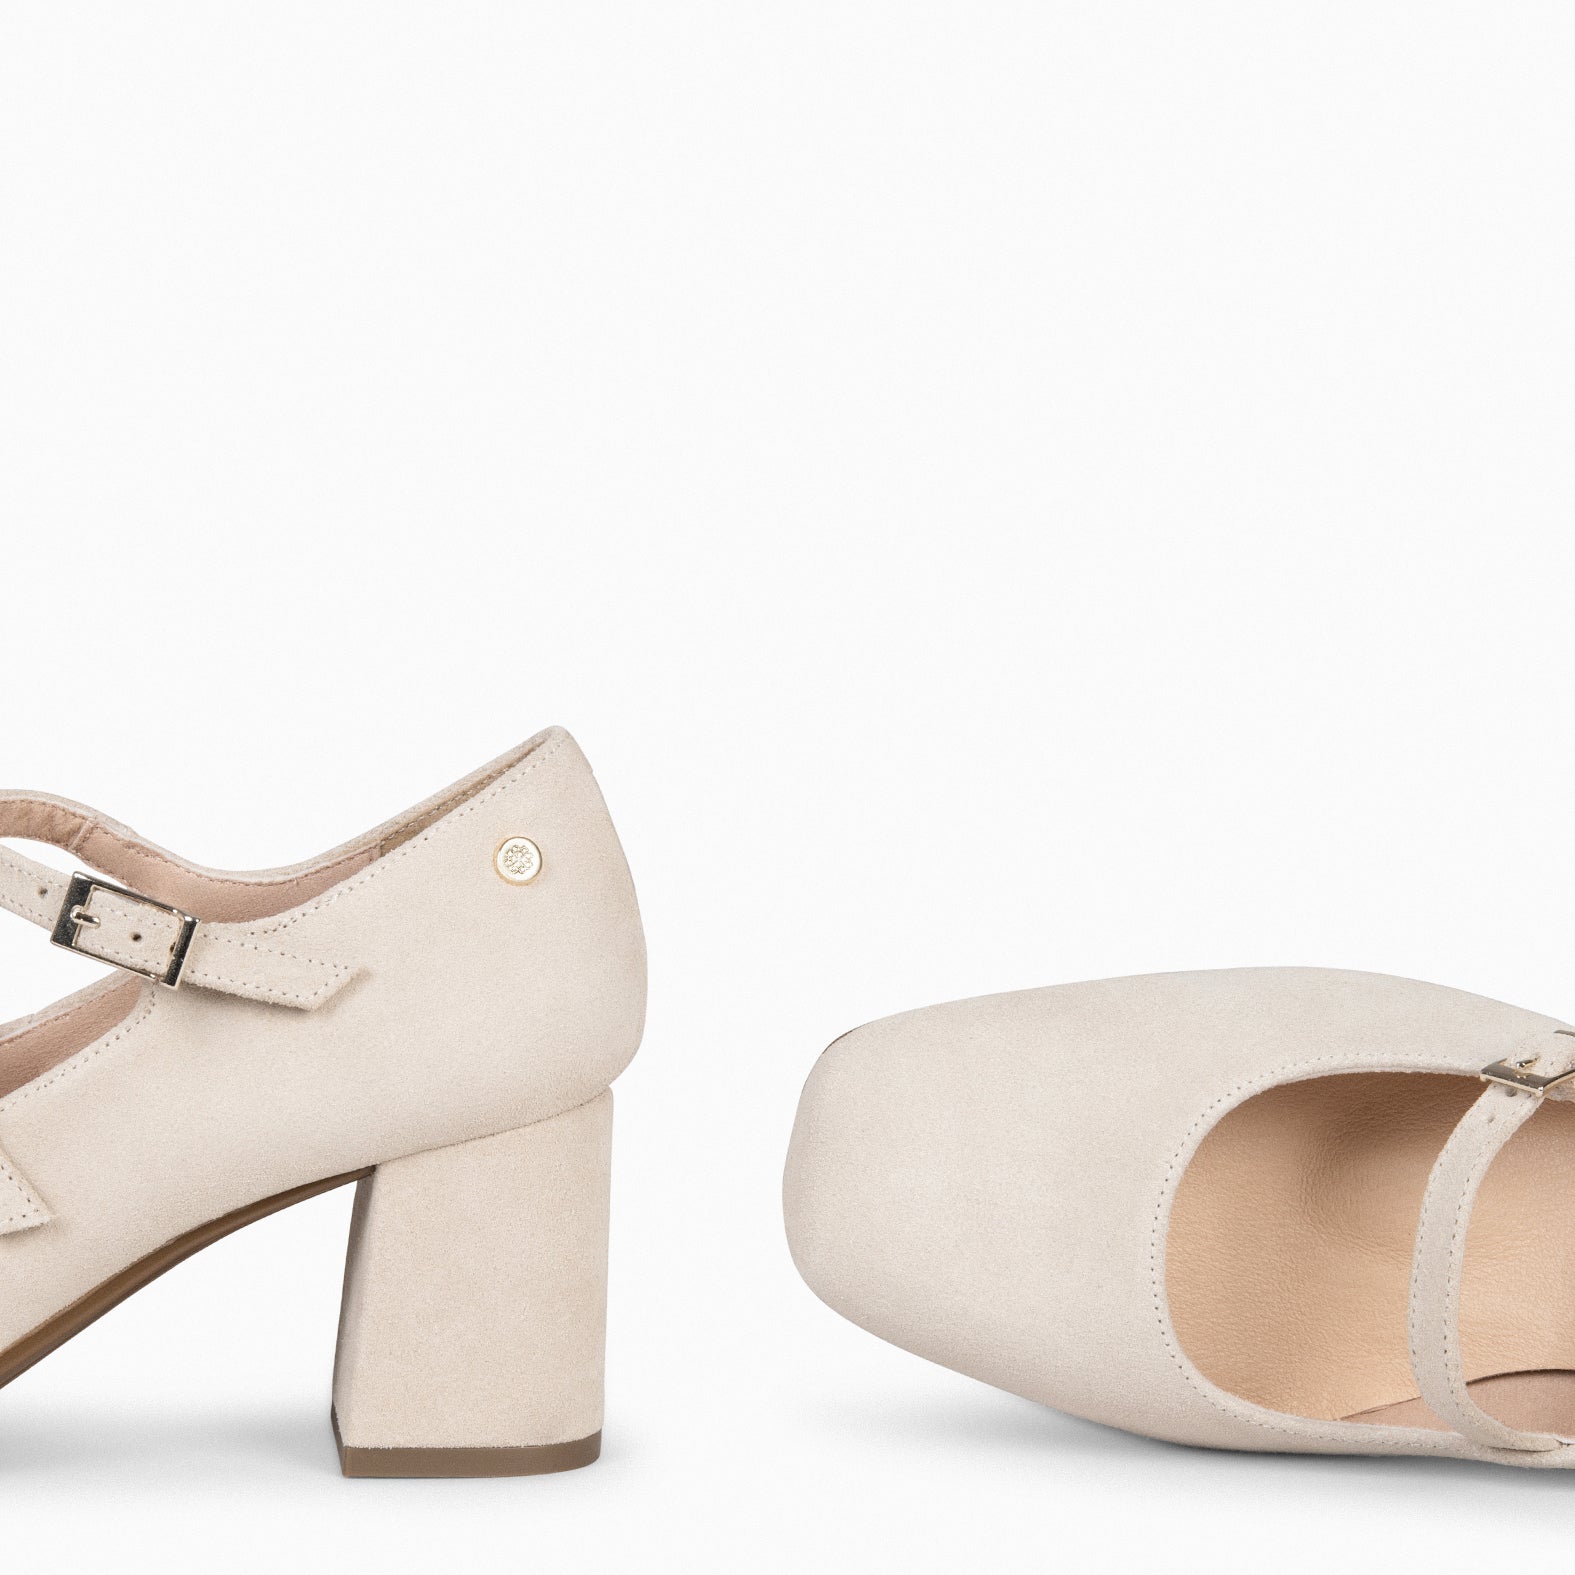 FEBRIS – BEIGE leather heel with straps